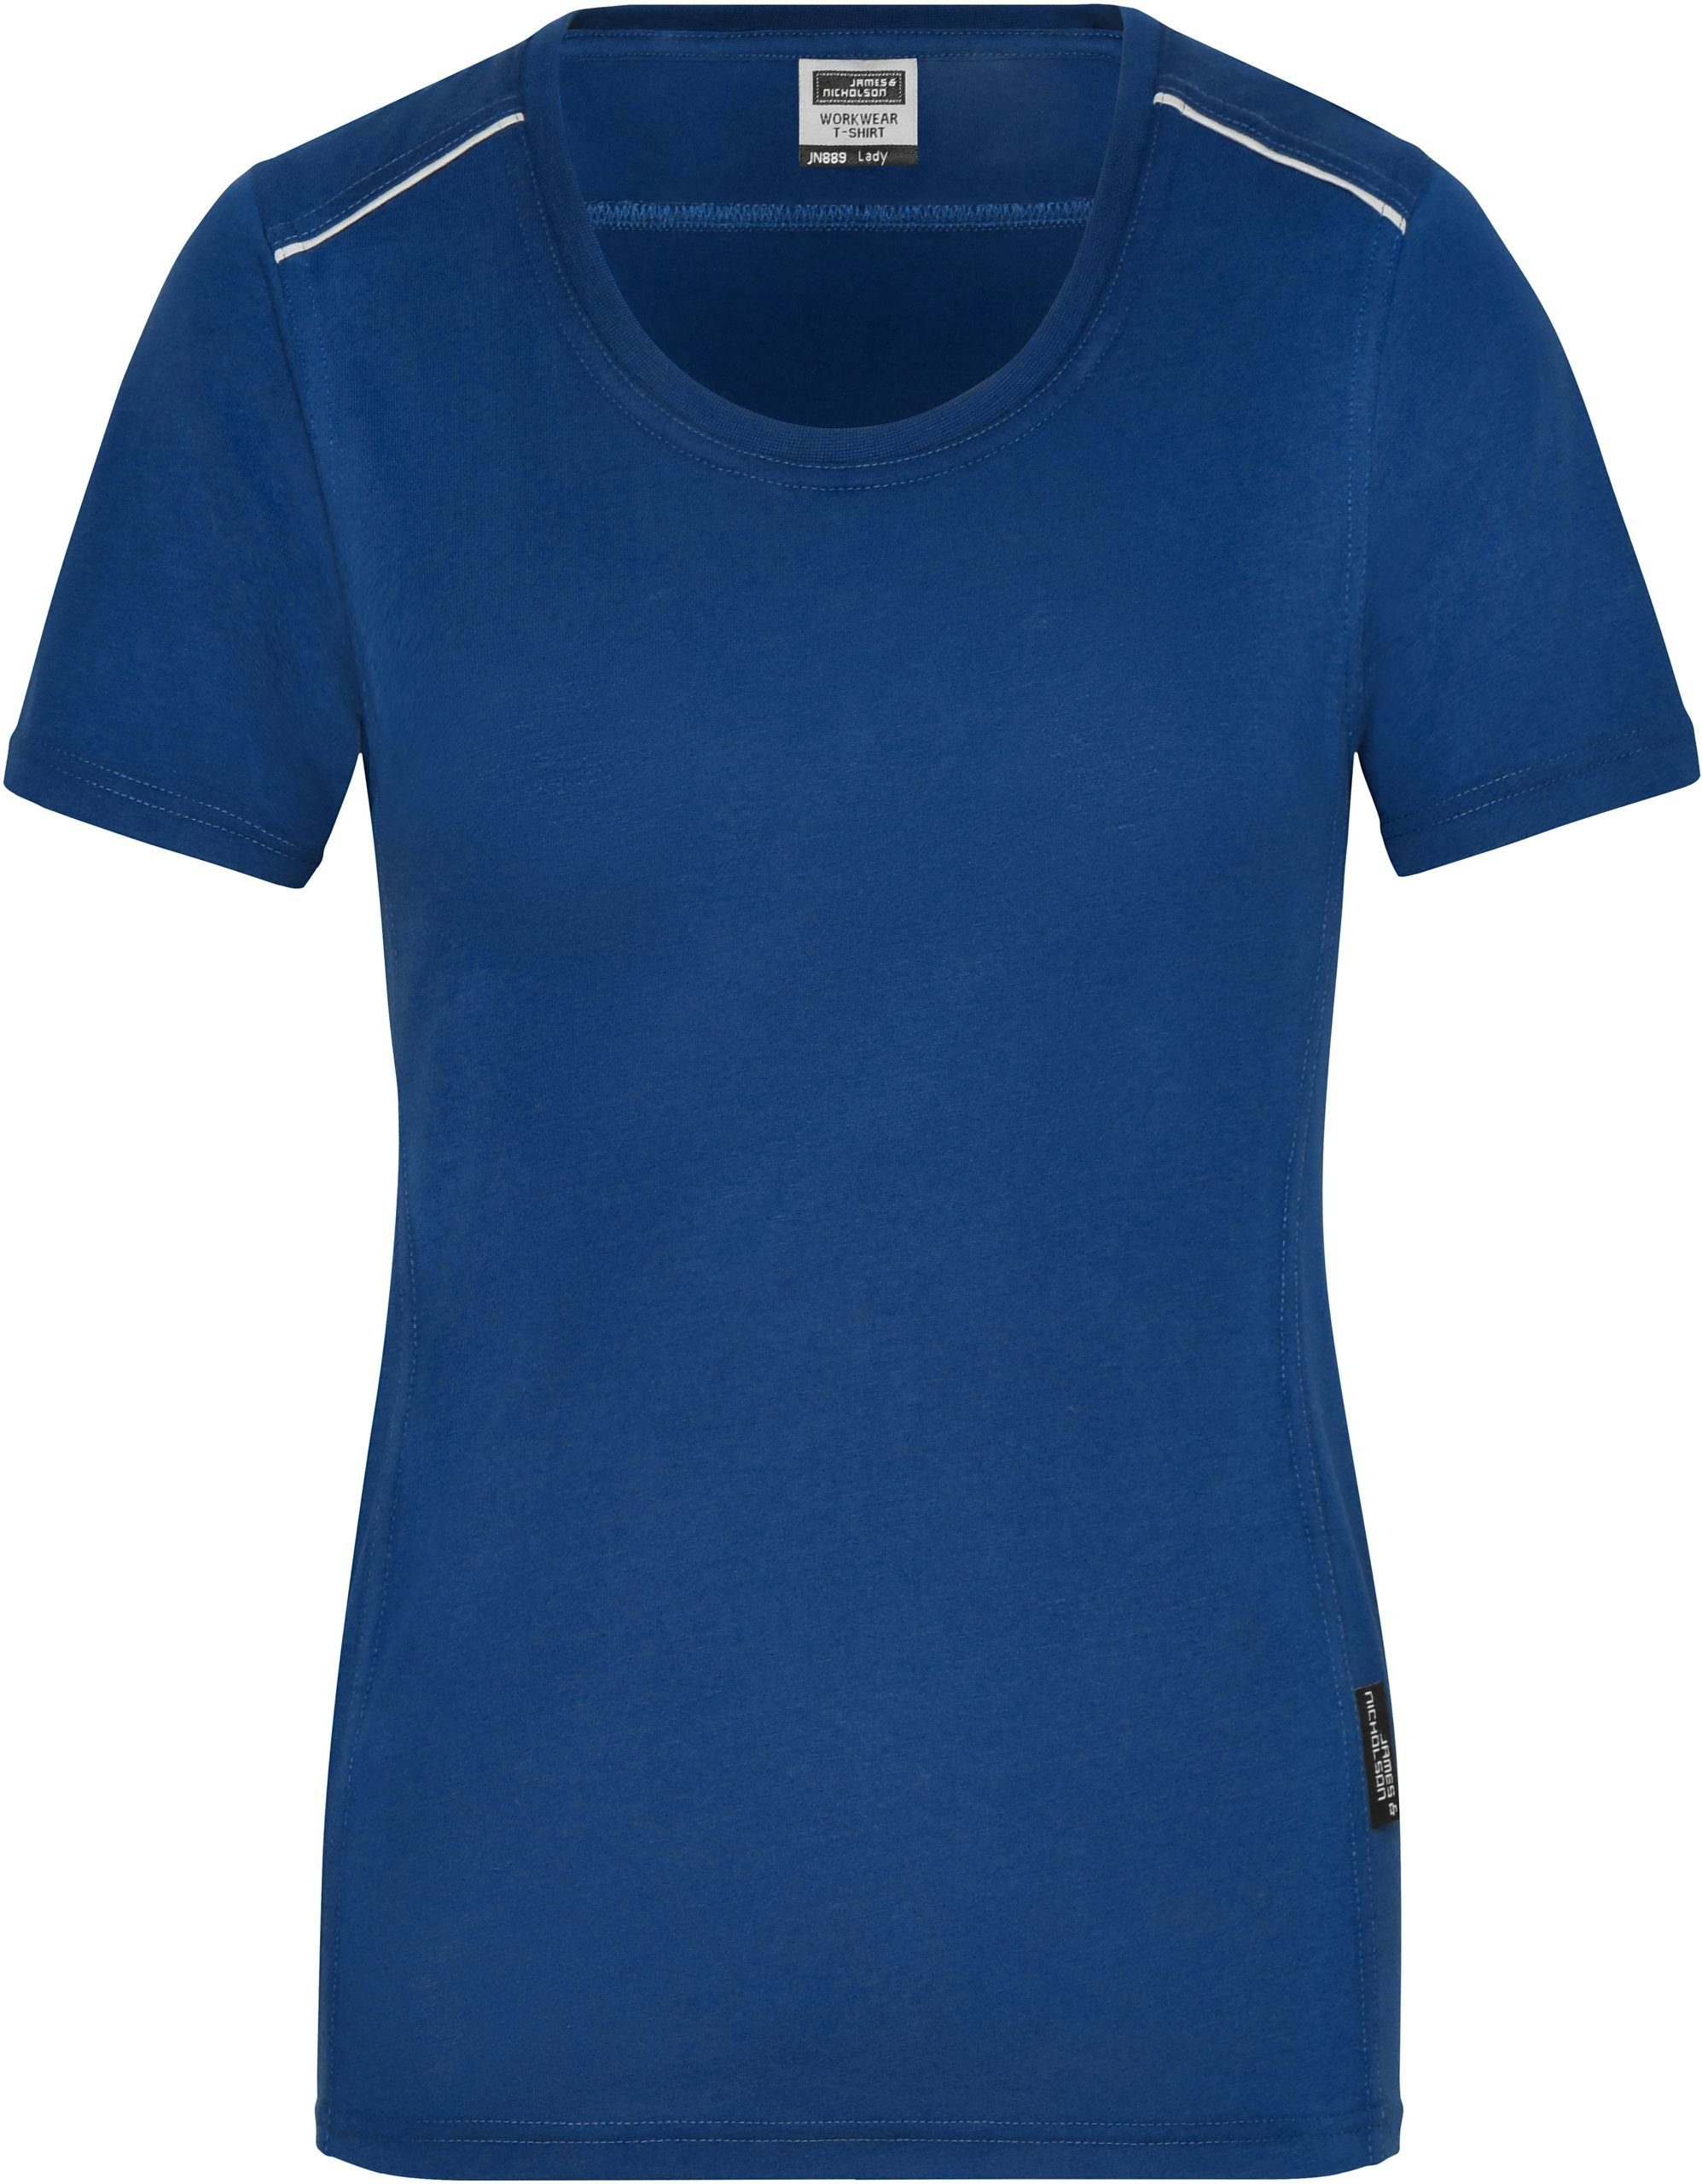 T-Shirt T-Shirt Bio & Workwear -Solid- Nicholson Baumwolle Arbeits FaS50889 James Navy